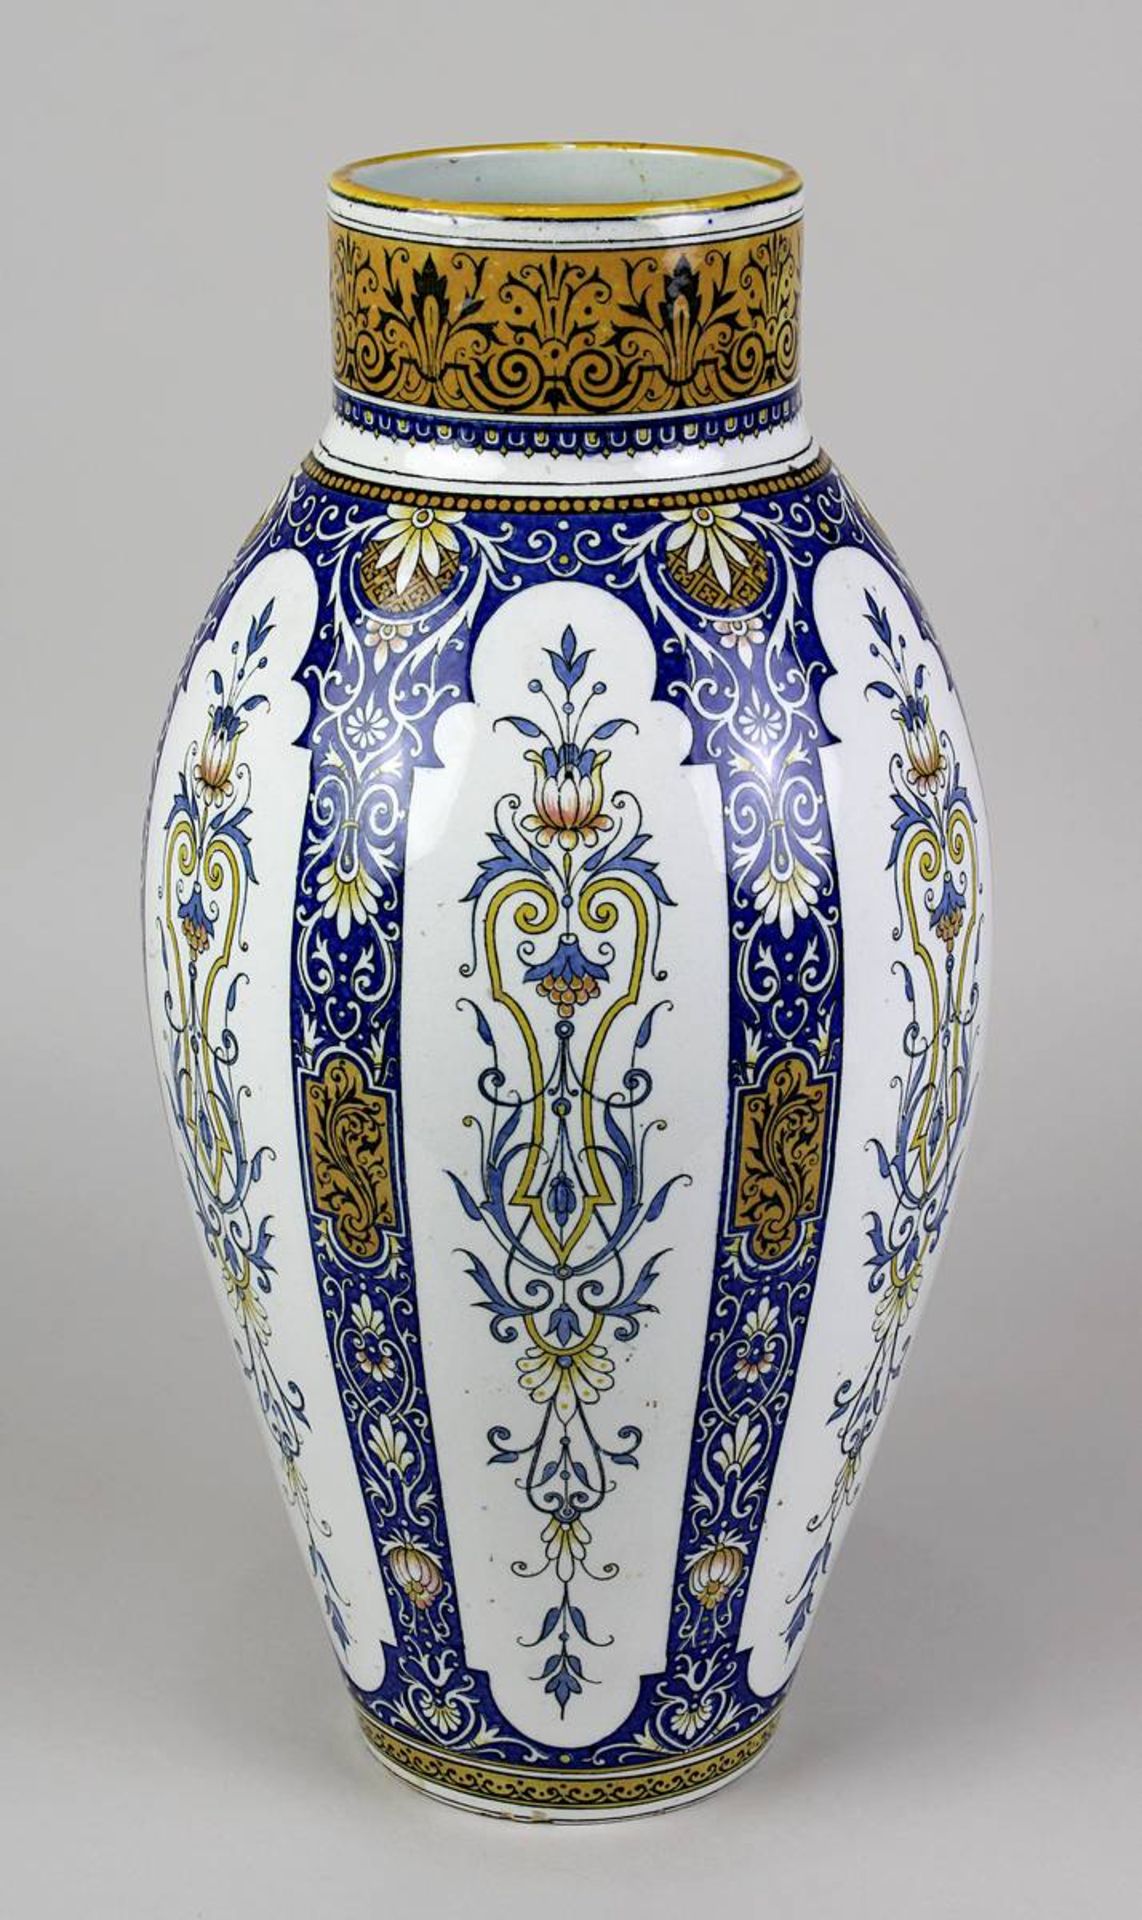 Sarreguemines Utzschneider, Historismus-Keramikvase nach Delfter Art, um 1900, Keramik heller